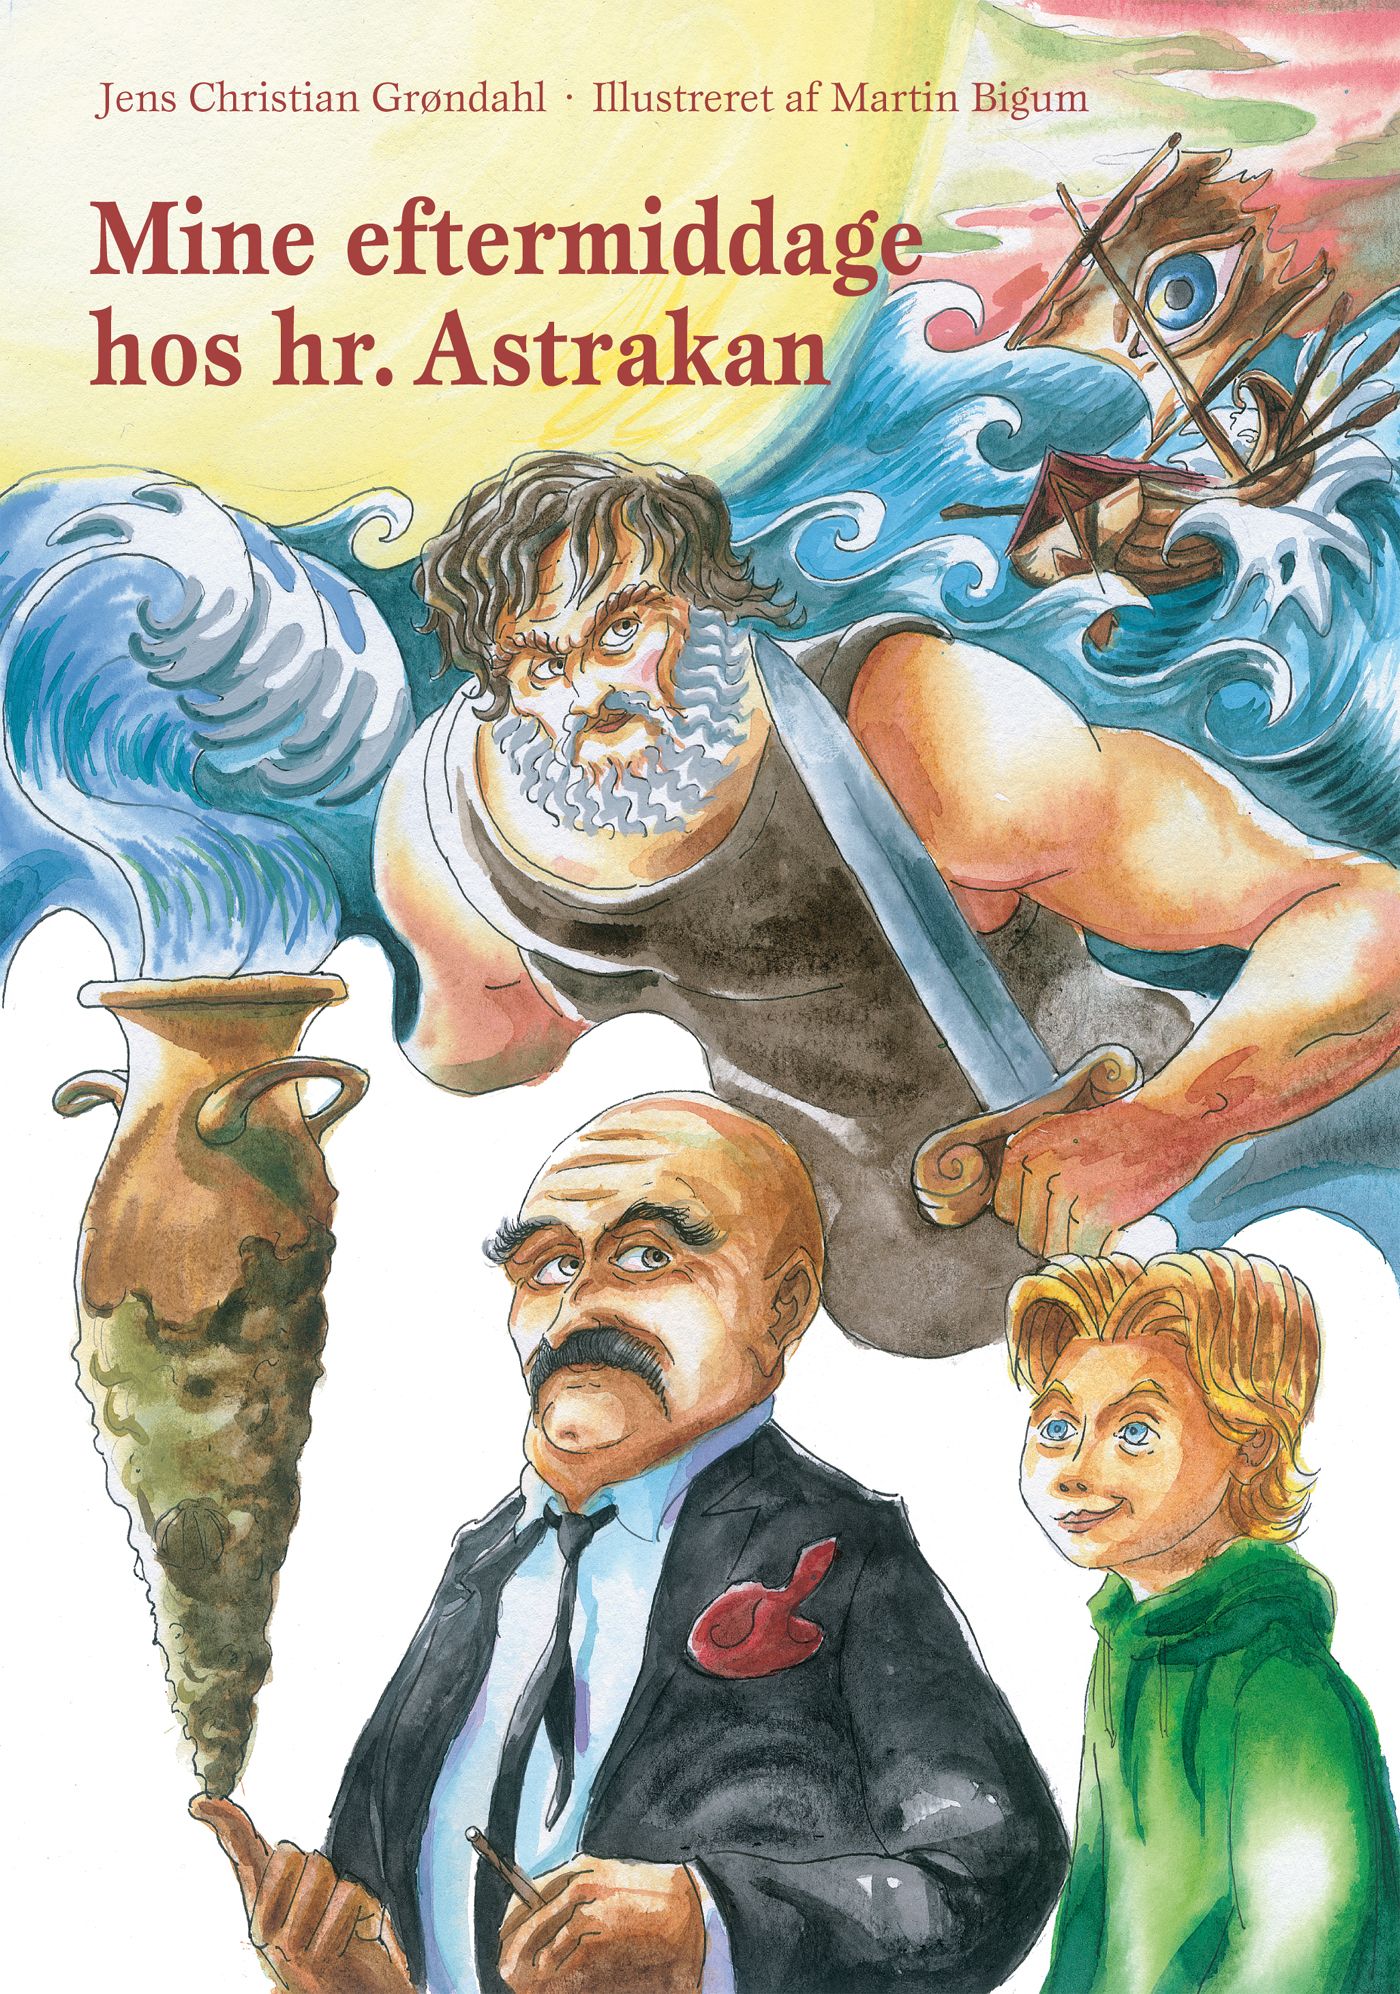 Mine eftermiddage hos hr. Astrakan, eBook by Jens Christian Grøndahl